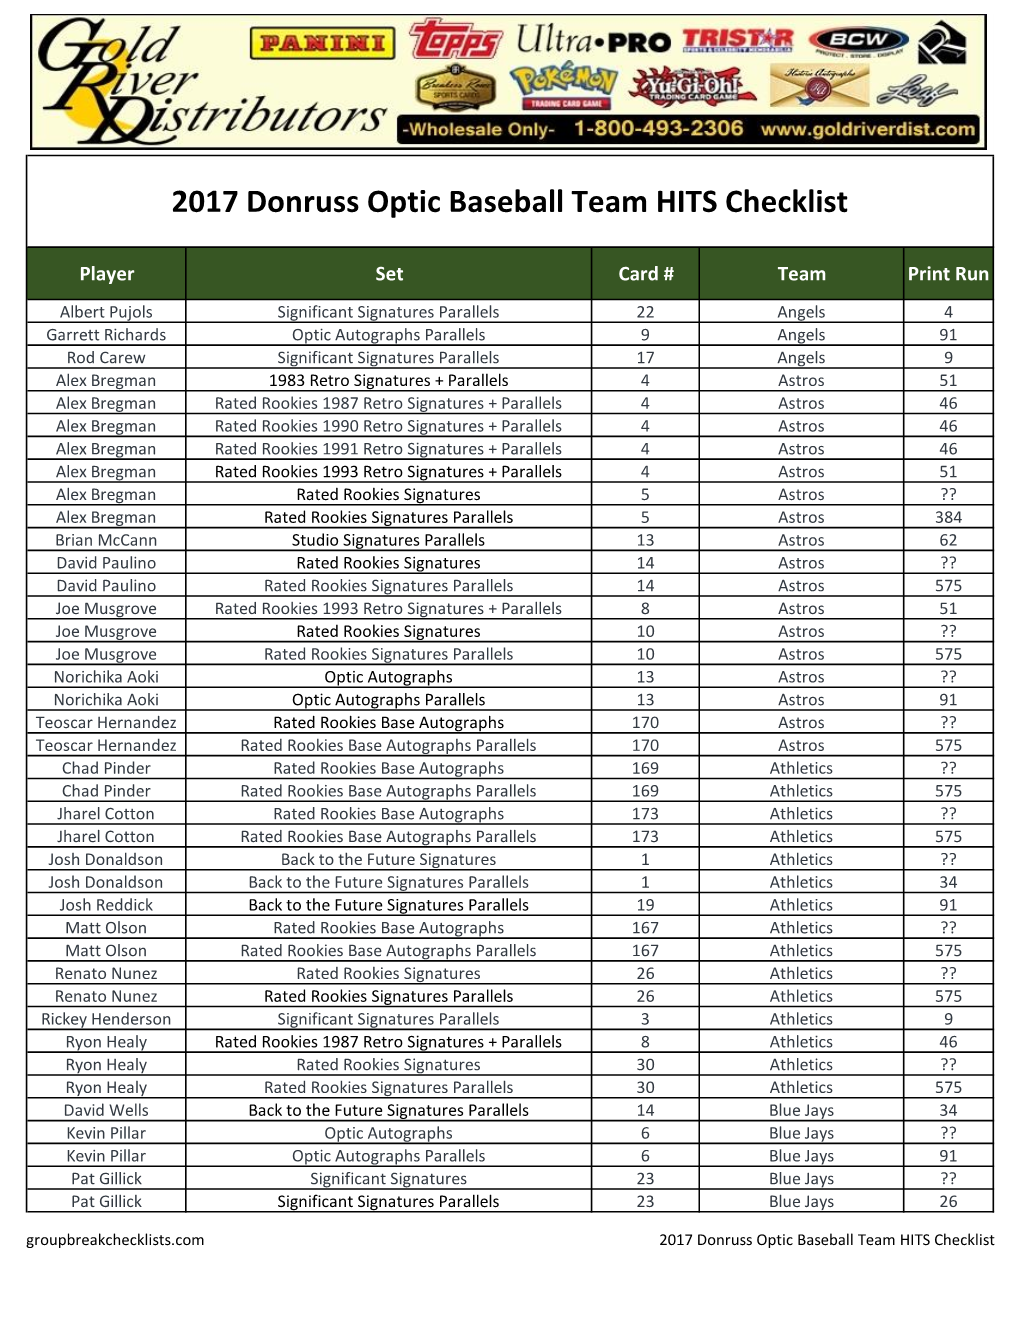 2017 Optic Baseball HITS Checklist